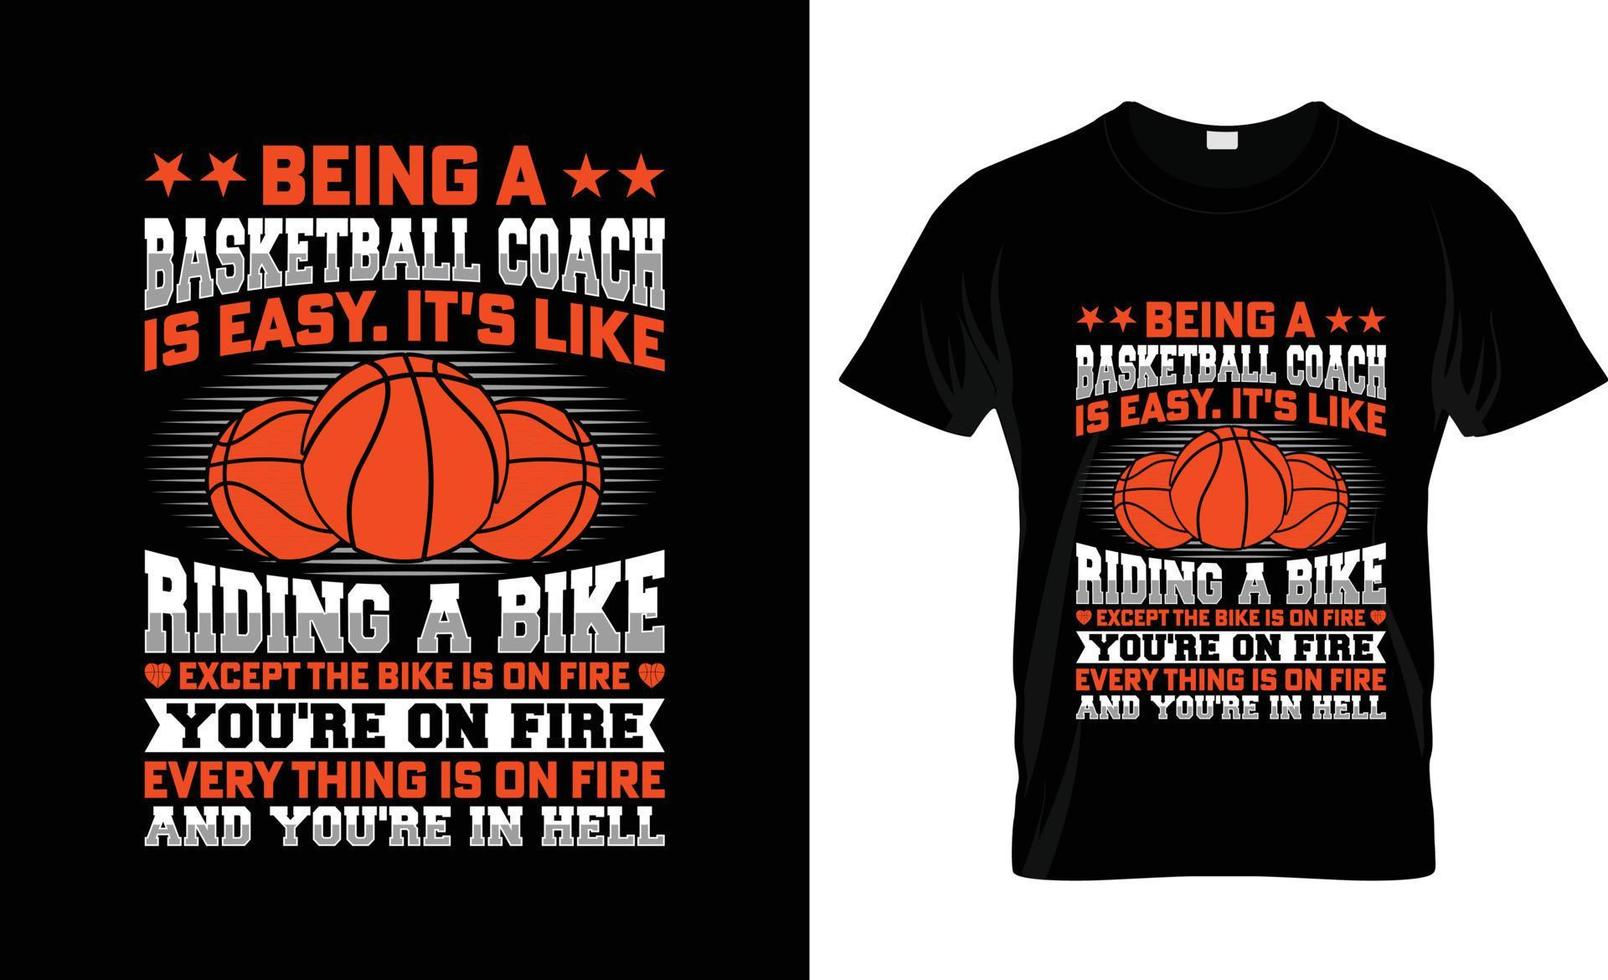 Being a basketball coach is easy Basketball t-shirt design, Basketball t-shirt slogan and apparel design, Basketball typography, Basketball vector, Basketball illustration vector